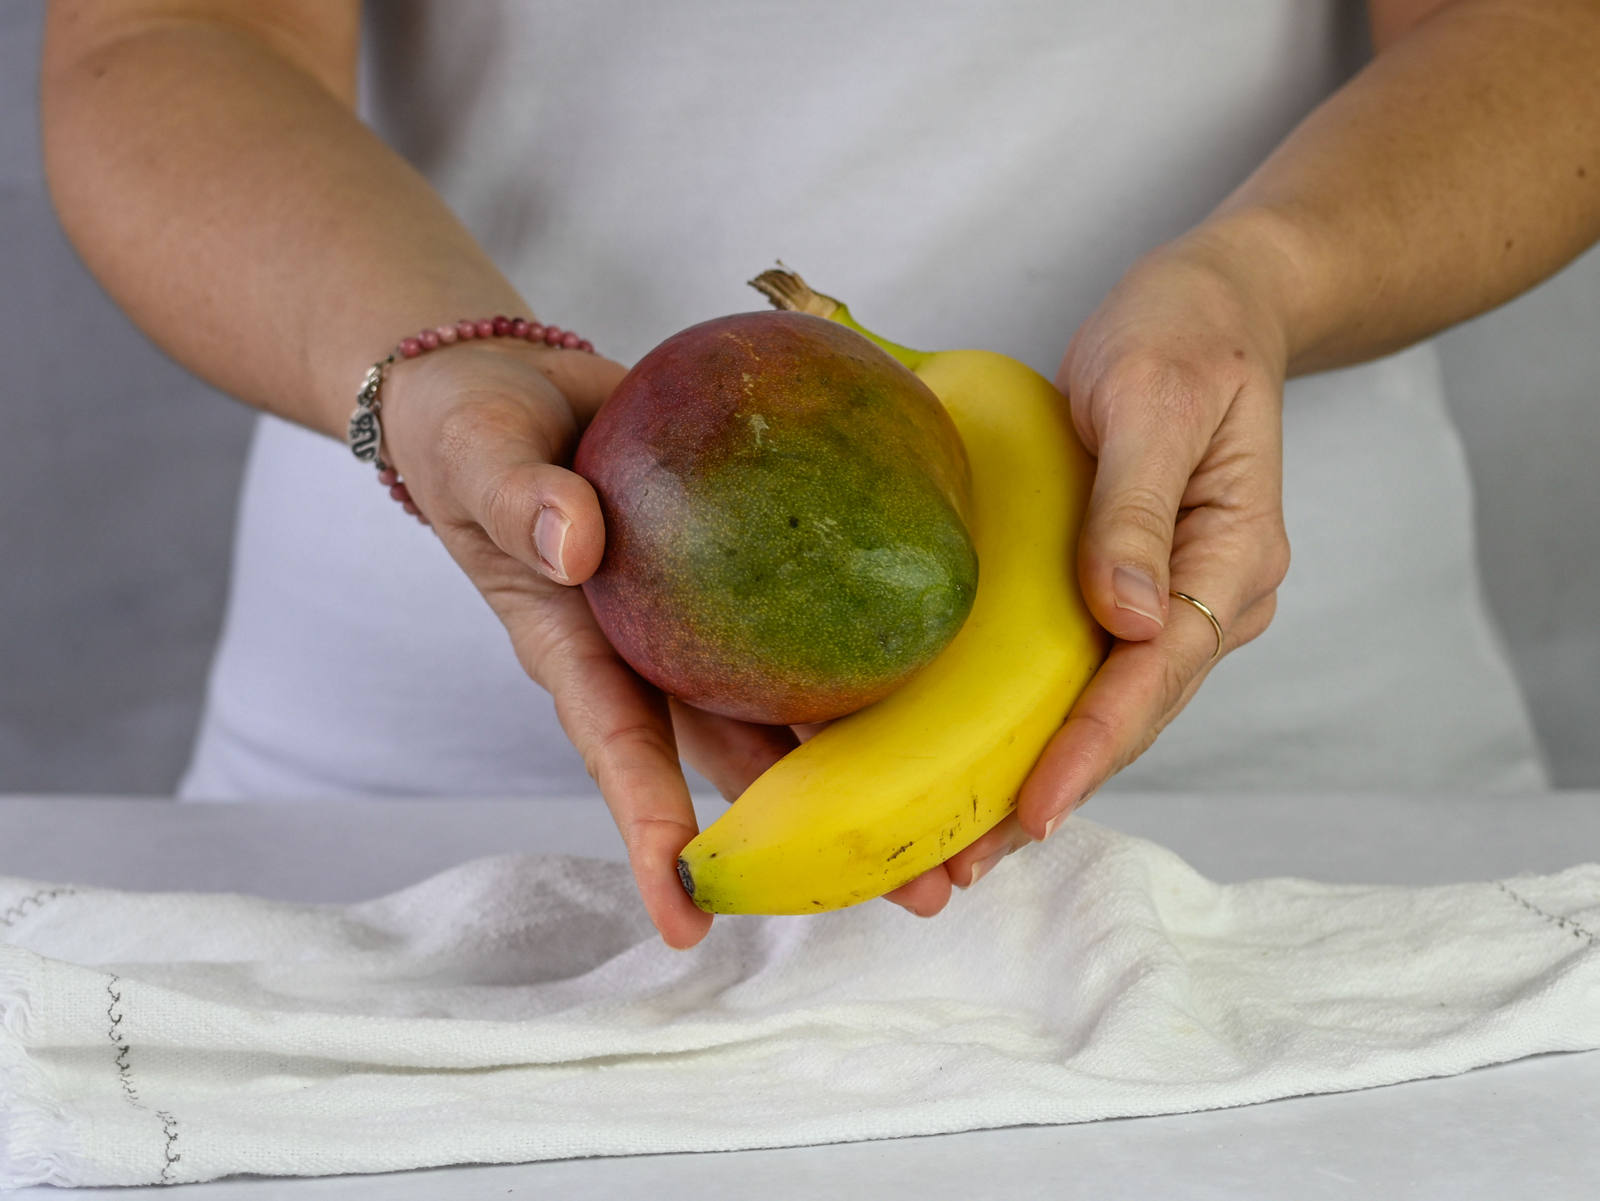 Mango-Bananen-Glace selber machen: Hauptzutaten